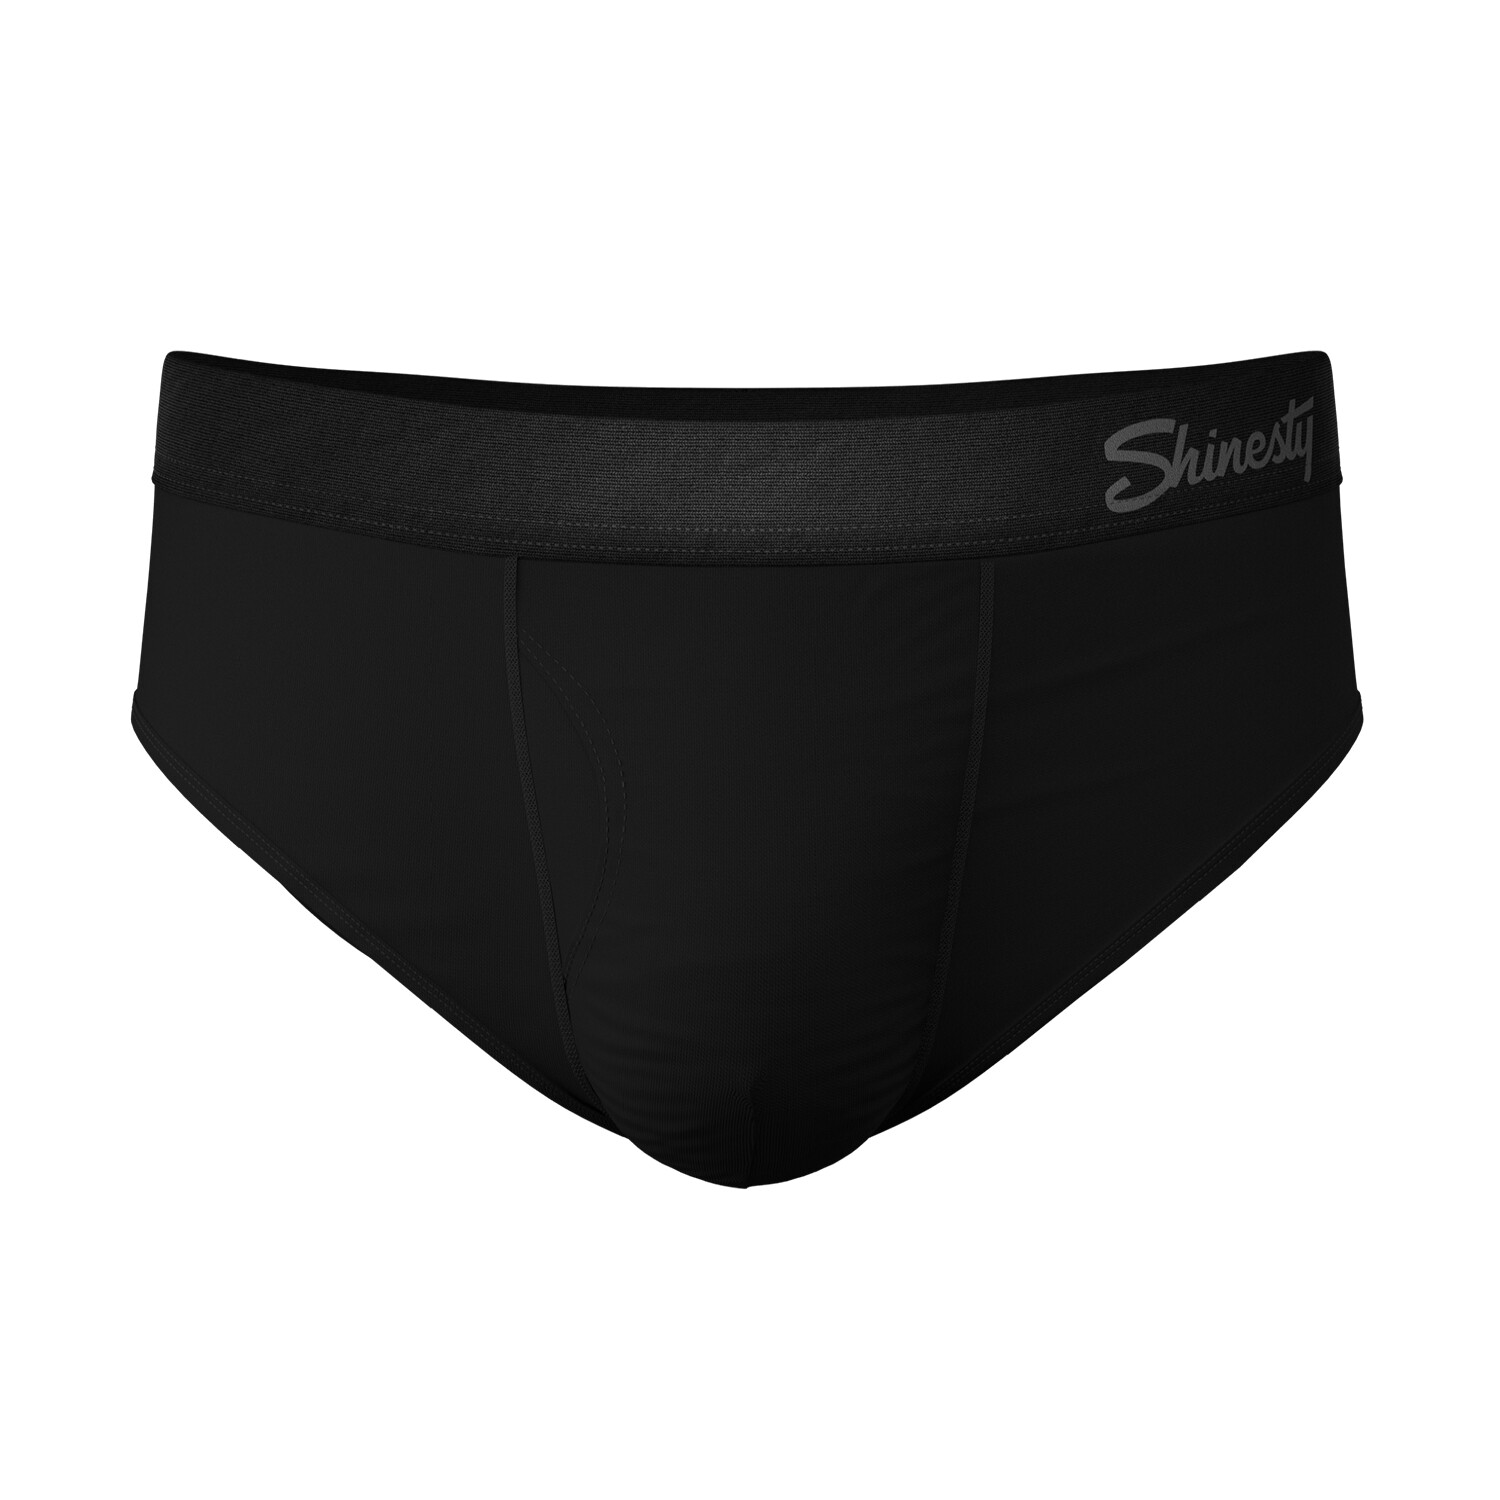 Shinesty's Ball Hammock Pouch Underwear Ball Hammock Technology Provides  Next Level Comfort